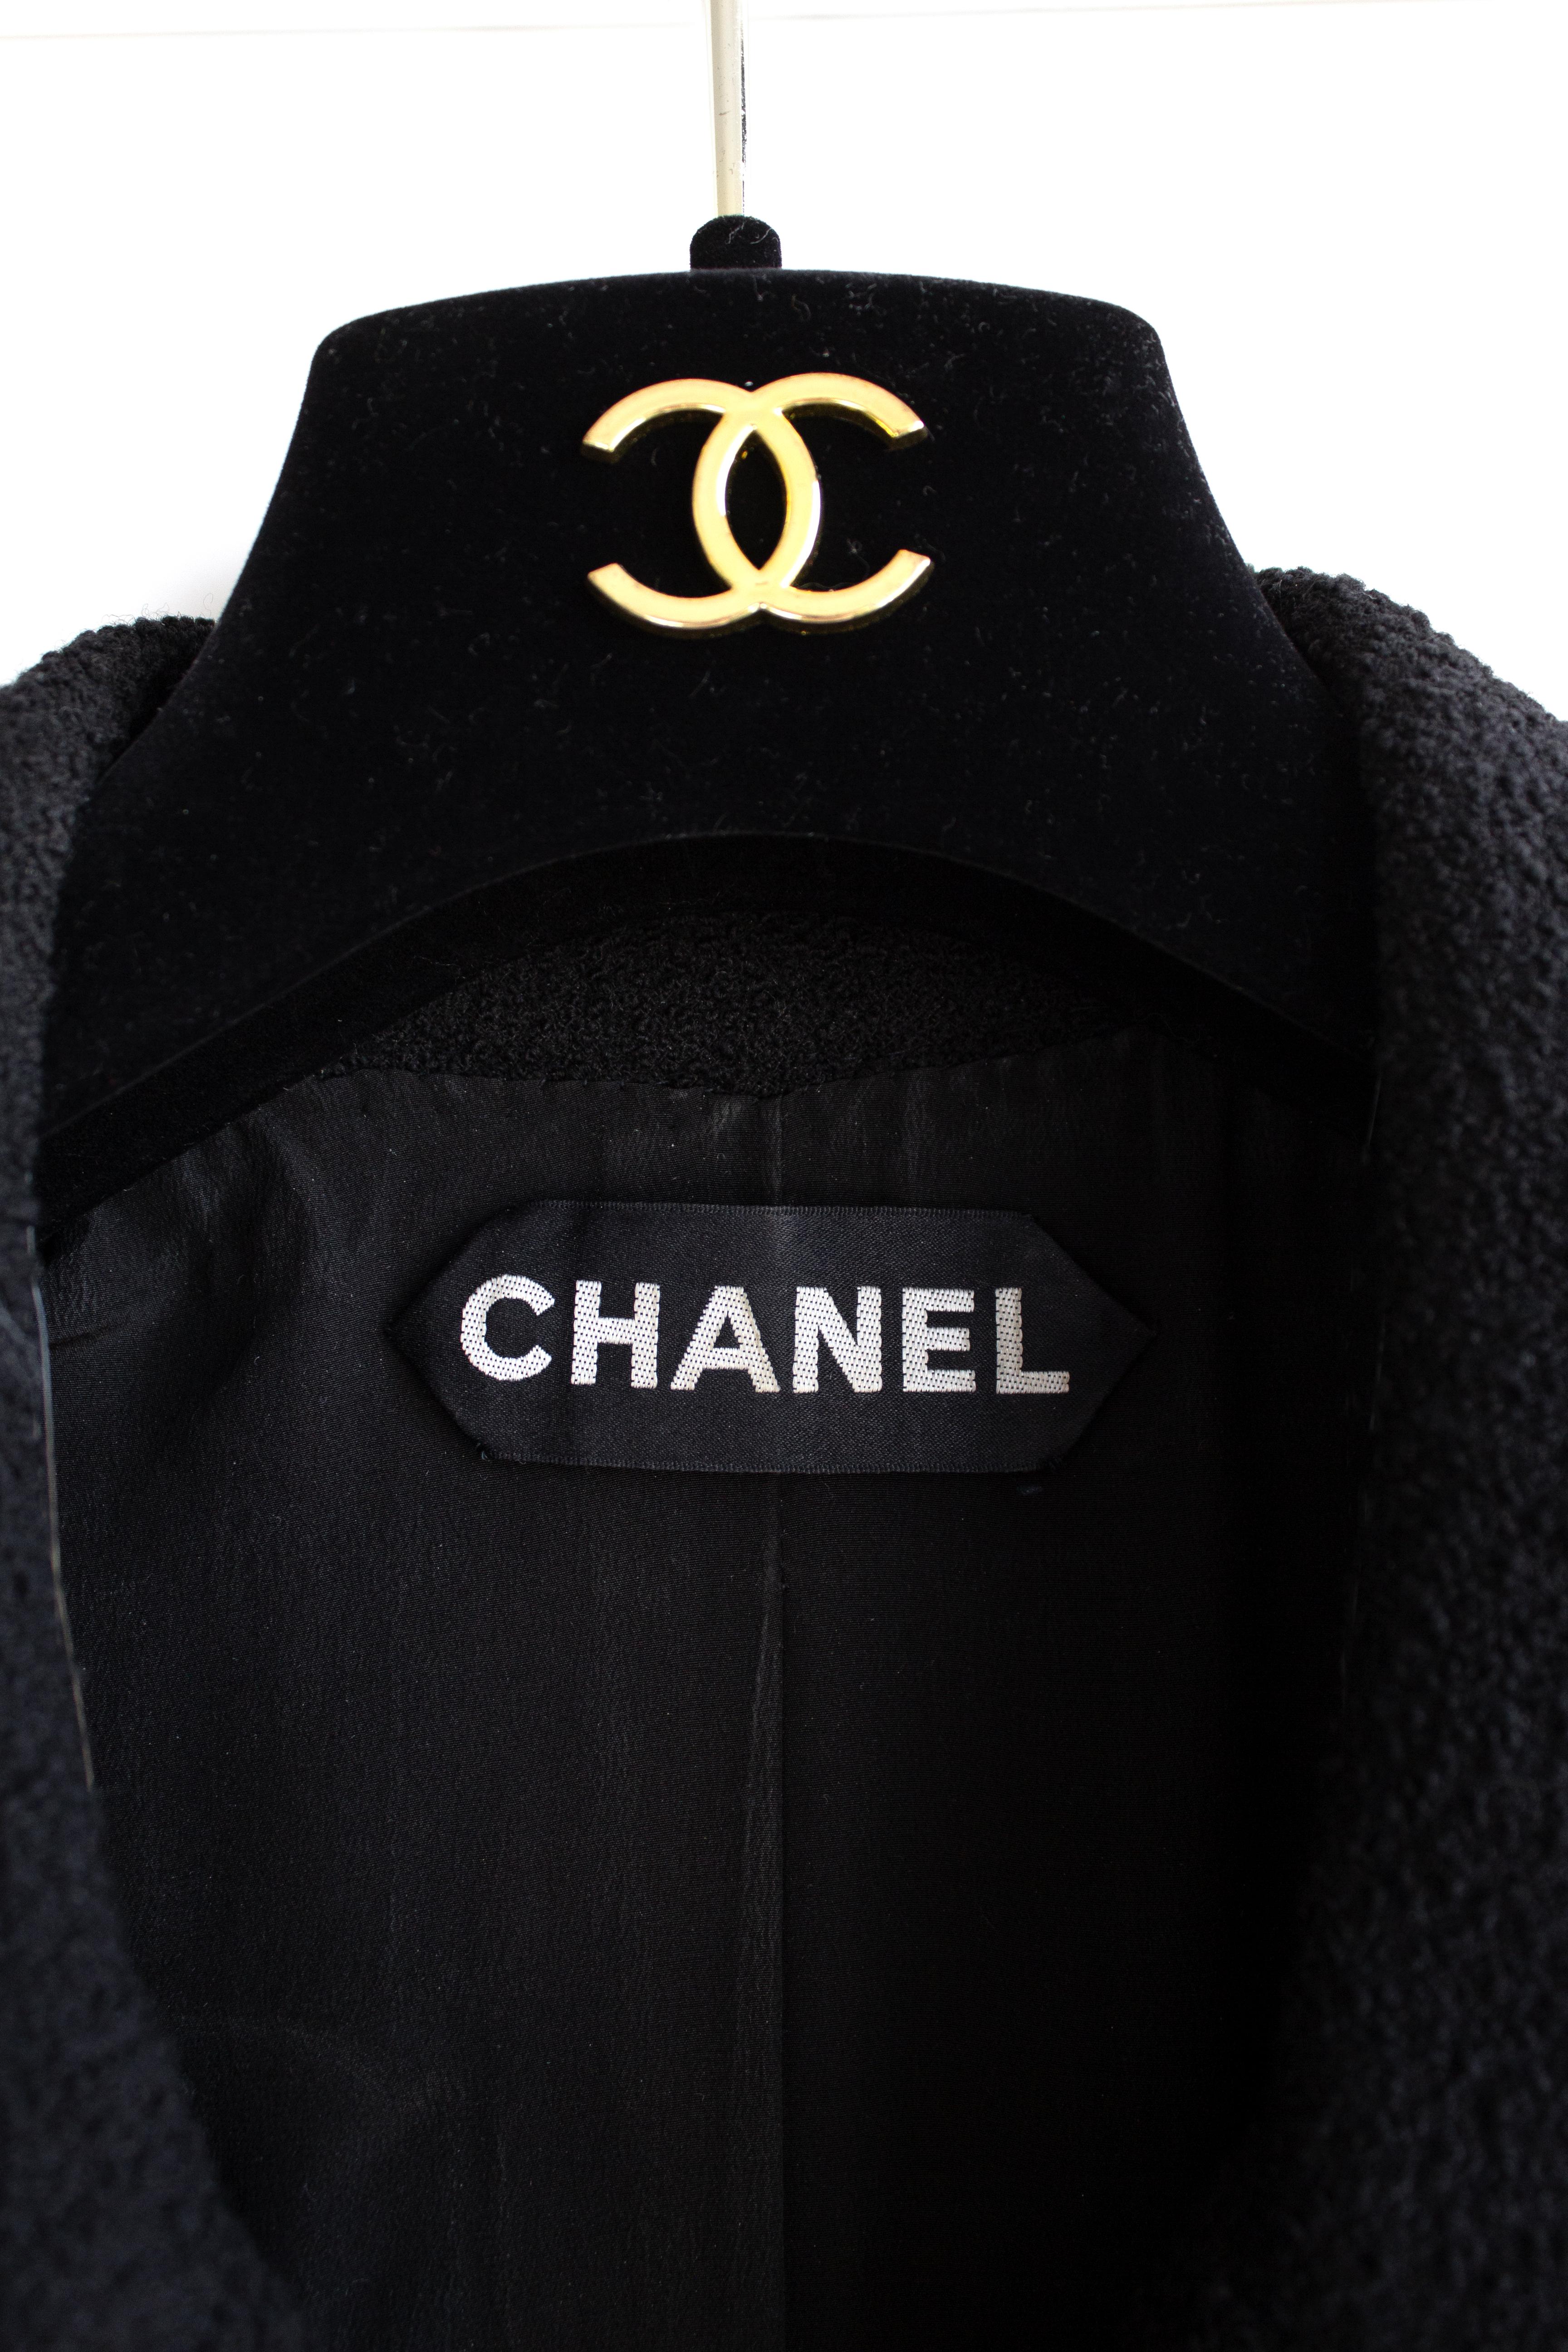 Chanel Vintage Haute Couture S/S 1995 Black White CC Tweed Jacket Skirt Suit 5